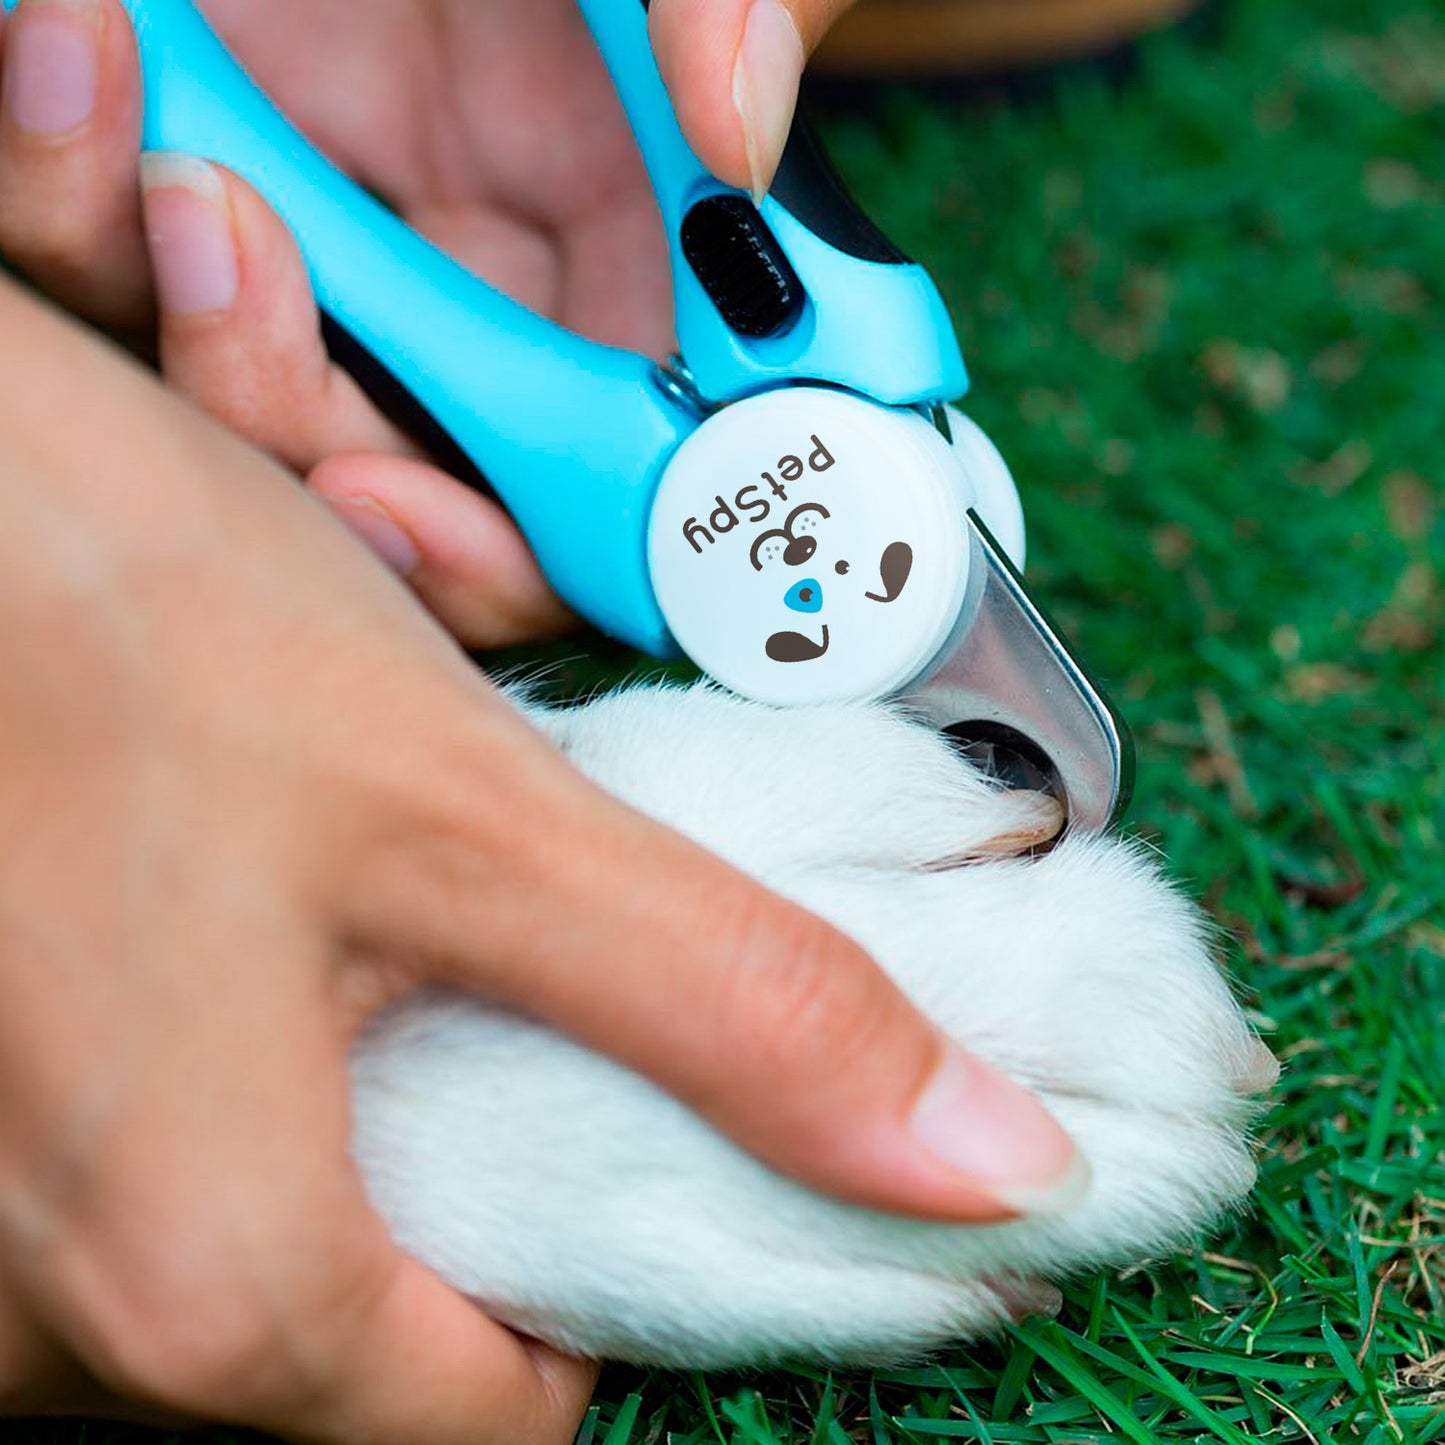 safety guard sensing dog nail clippers